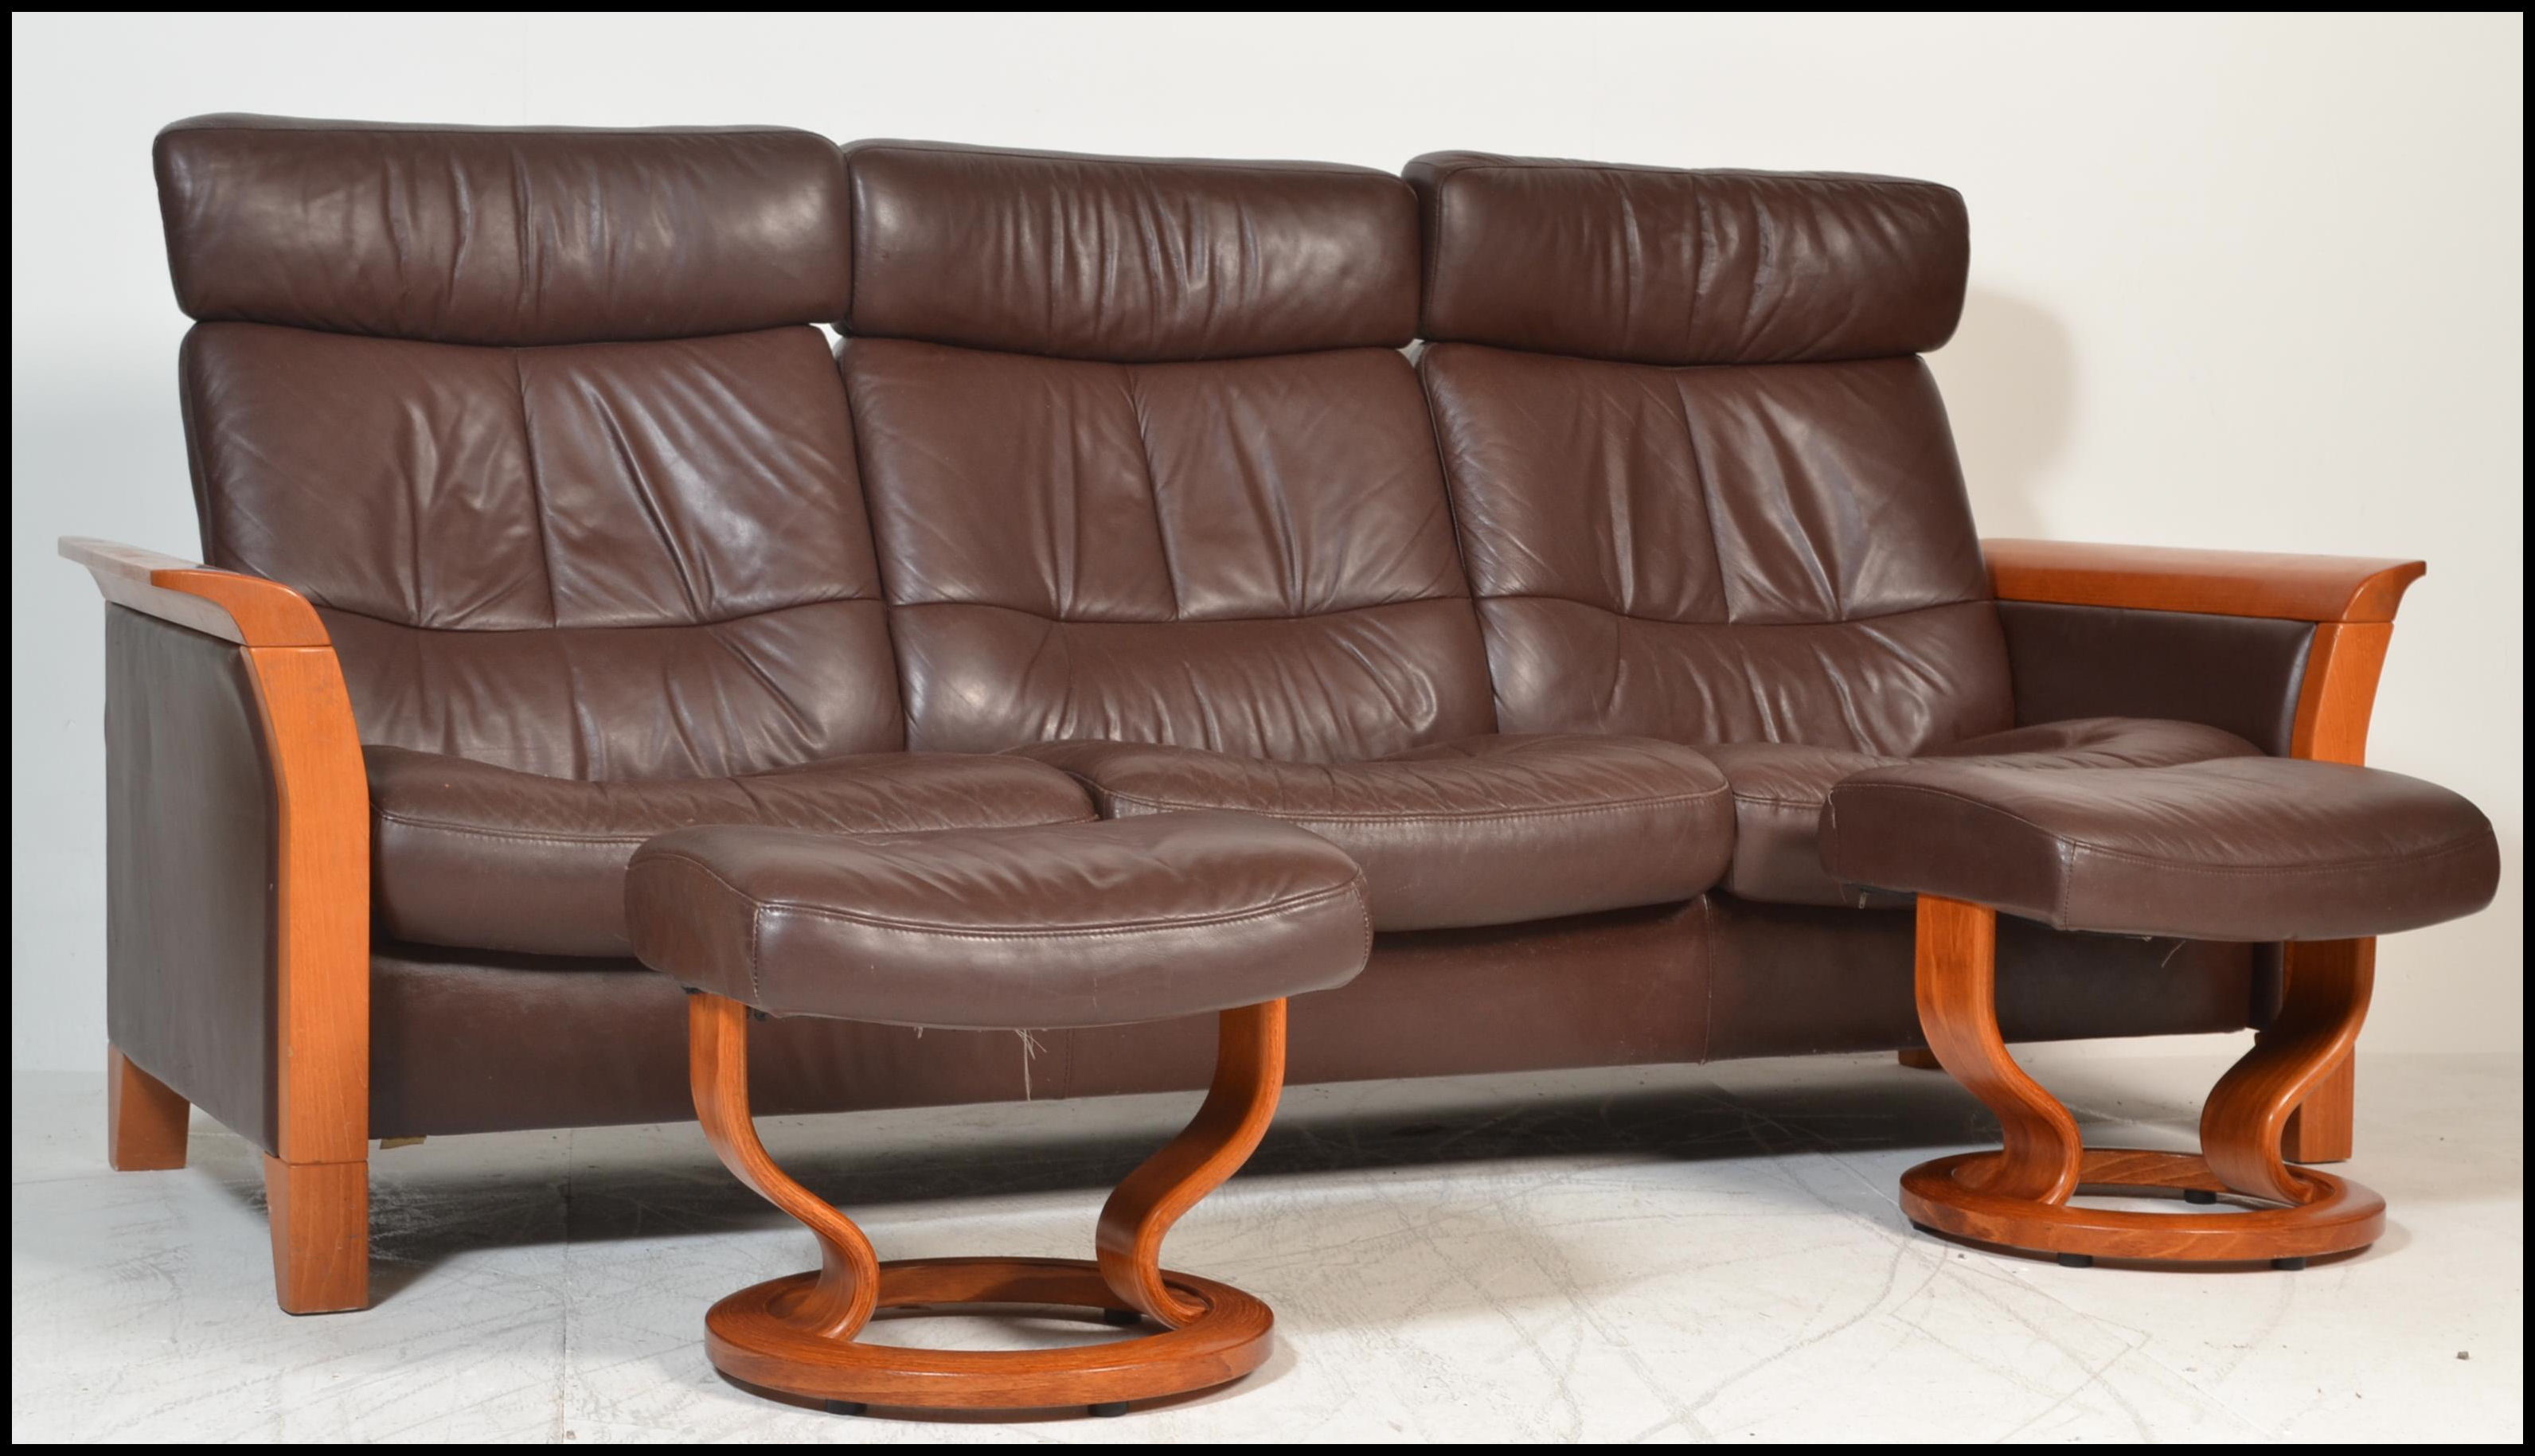 An Ekornes Stressless three seater brown leather Reclining Sofa of Scandinavian design, having